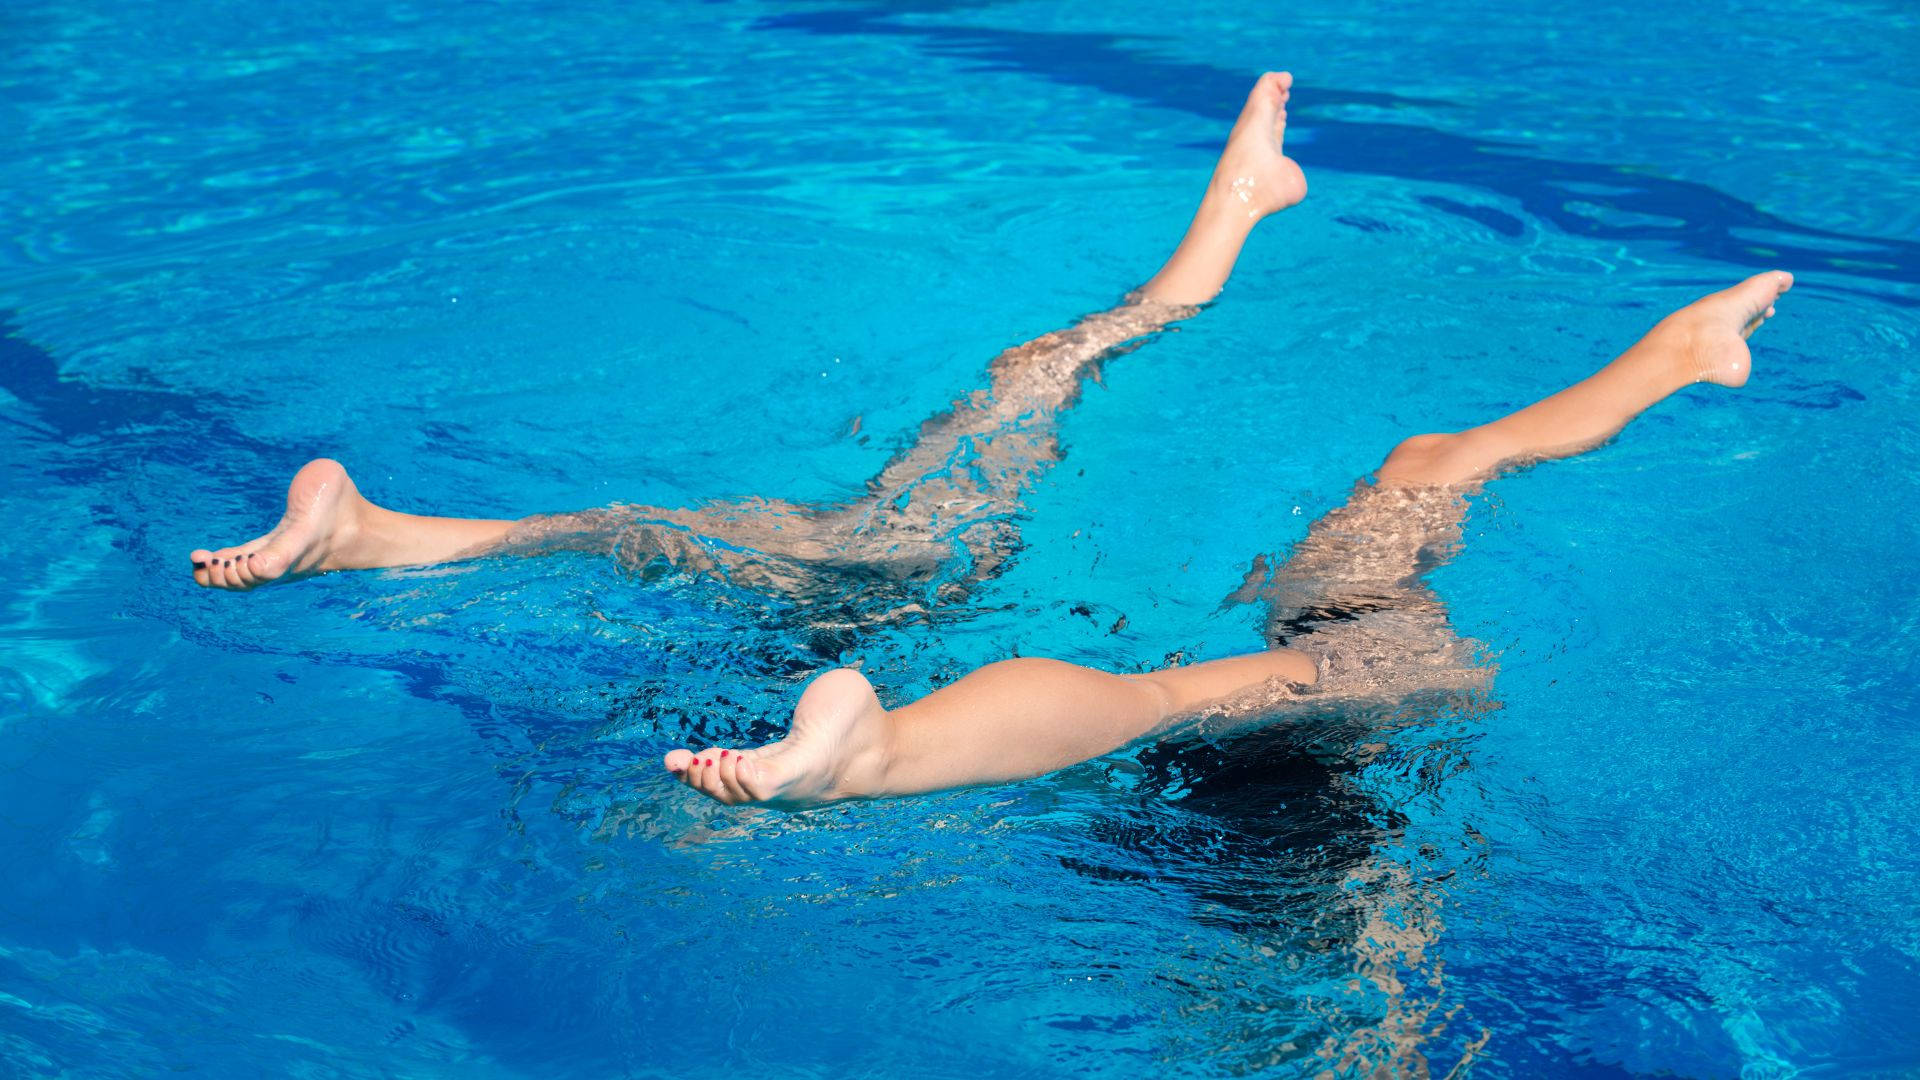 "An Artistic Swimmer Performs an Upside-Down Split Underwater" Wallpaper